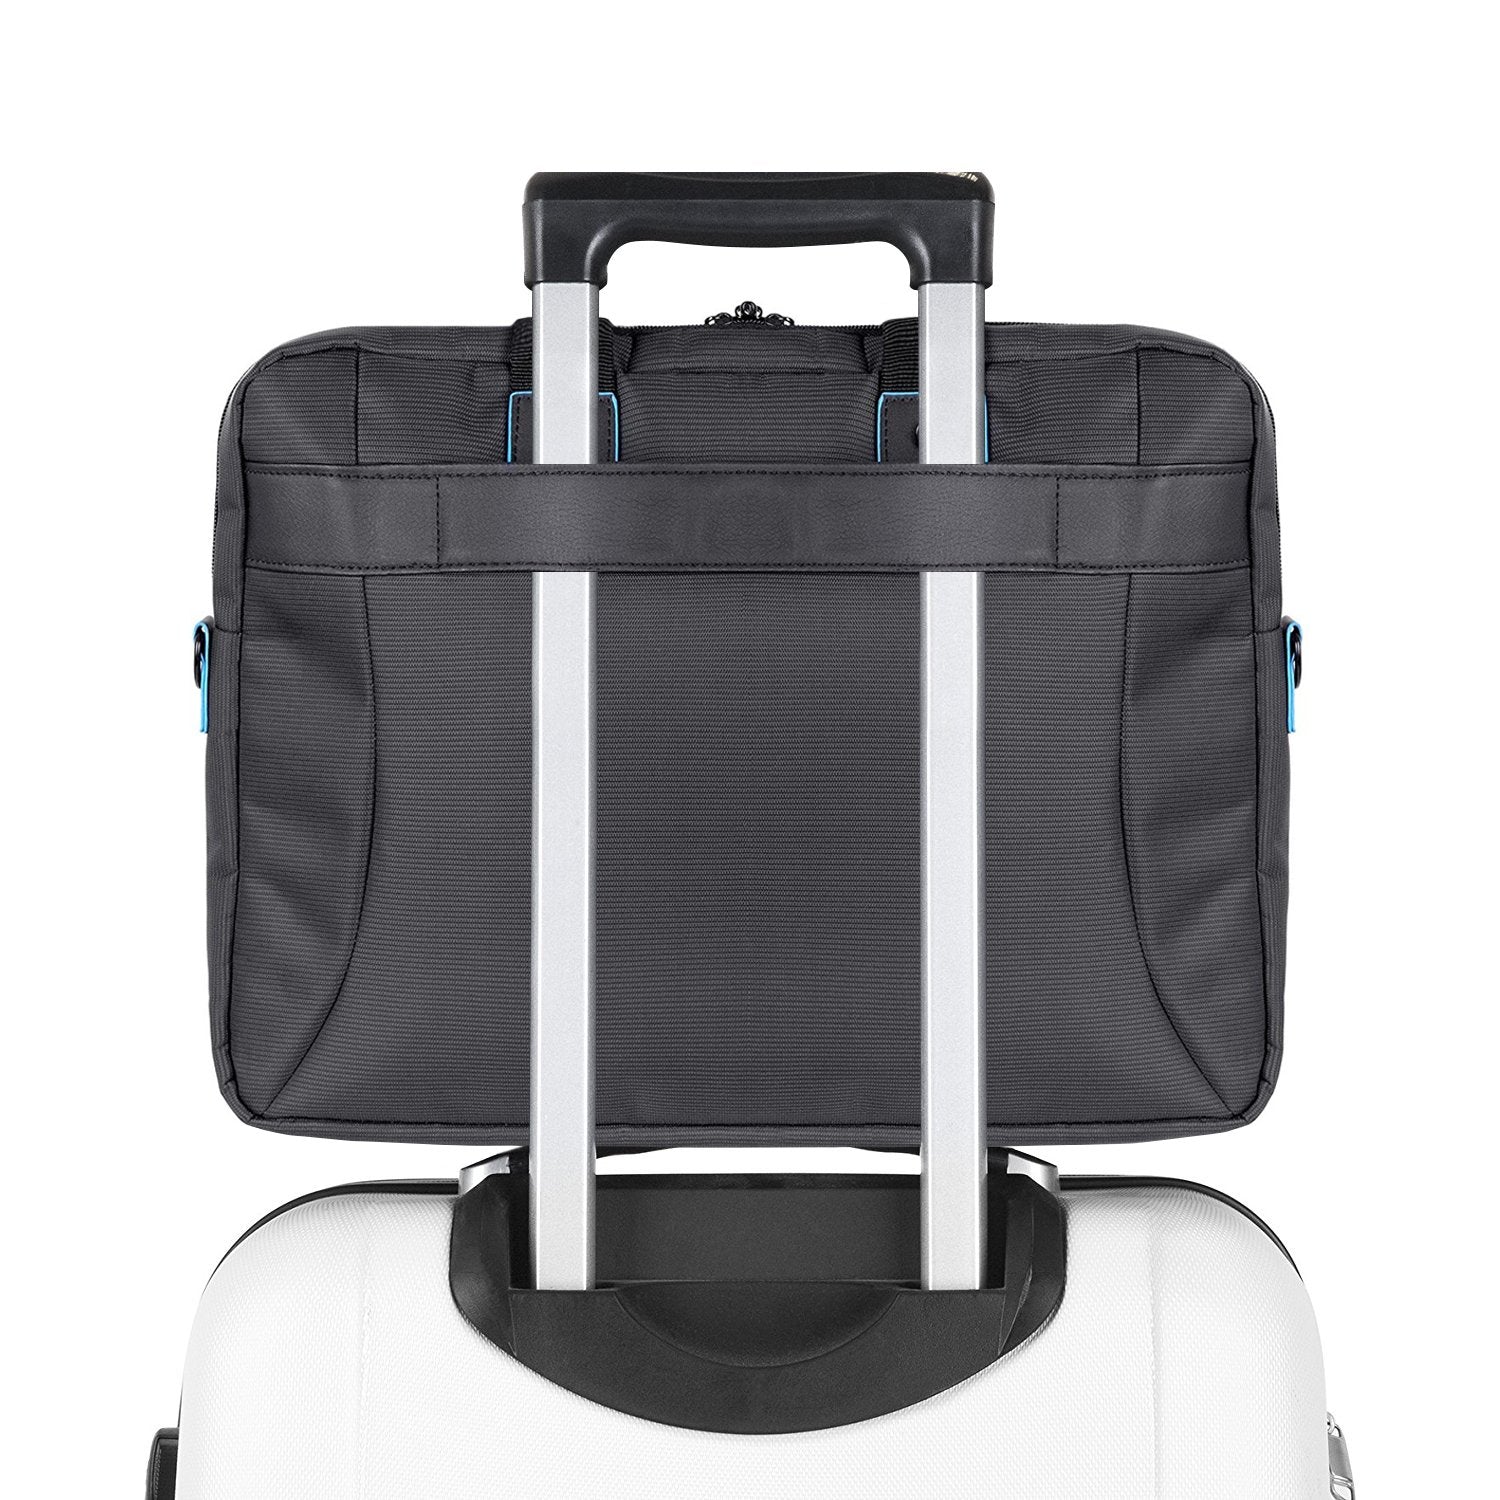 Duronic Travel Laptop Messenger Business Work Shoulder Bag LB16 | University College School MacBook Tablet Case Protector Sleeve | Up to 15.6 Inch Internal Laptop Sleeve | Water Resistant